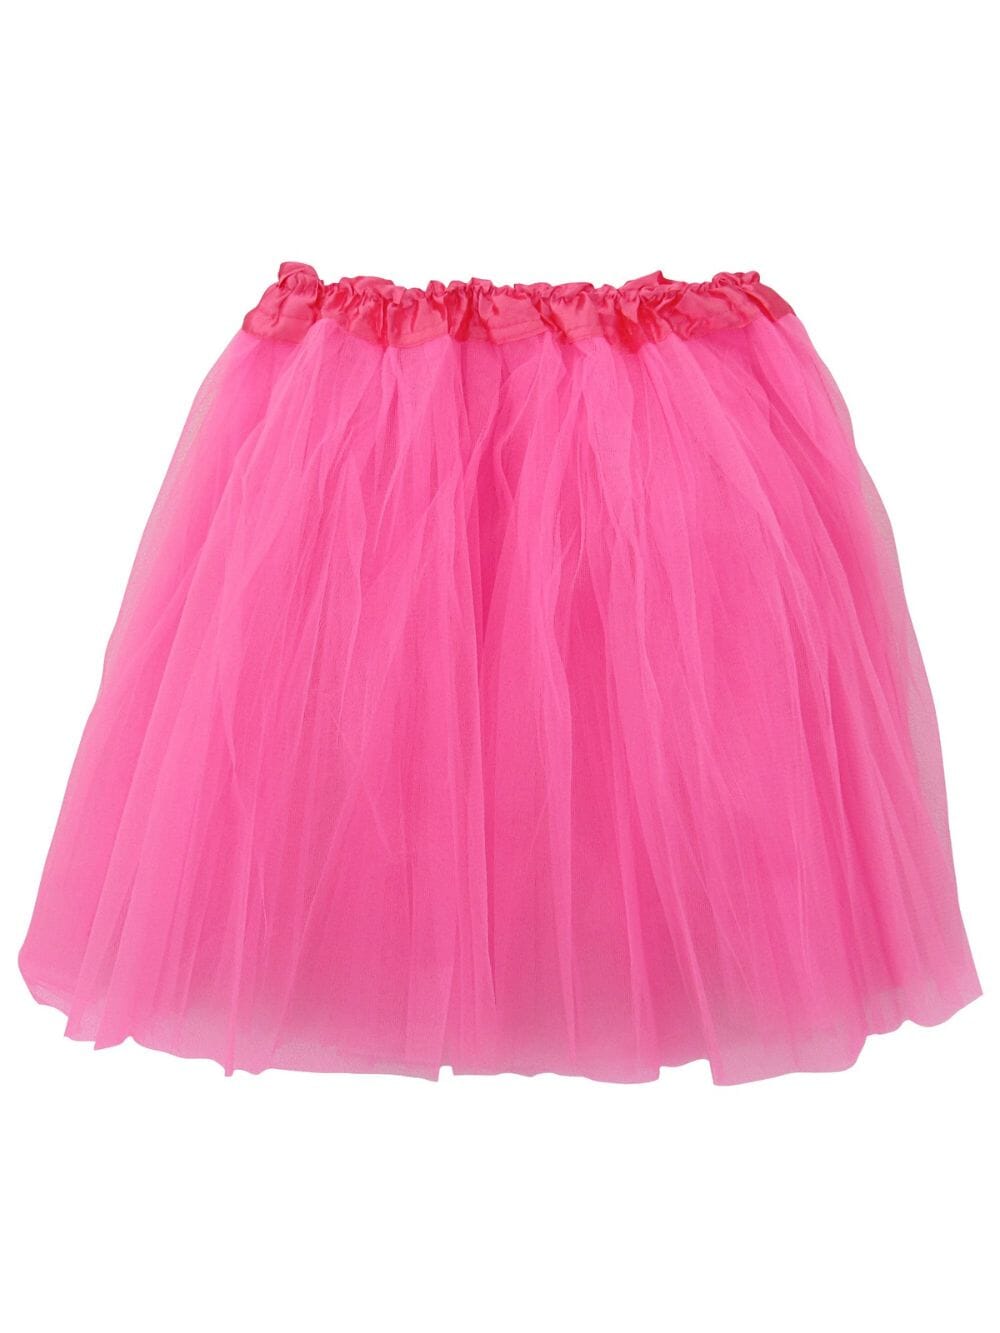 Neon Pink Plus Size Adult Tutu Skirt - Women's Plus Size 3- Layer Basic Ballet Costume Dance Tutus - Sydney So Sweet